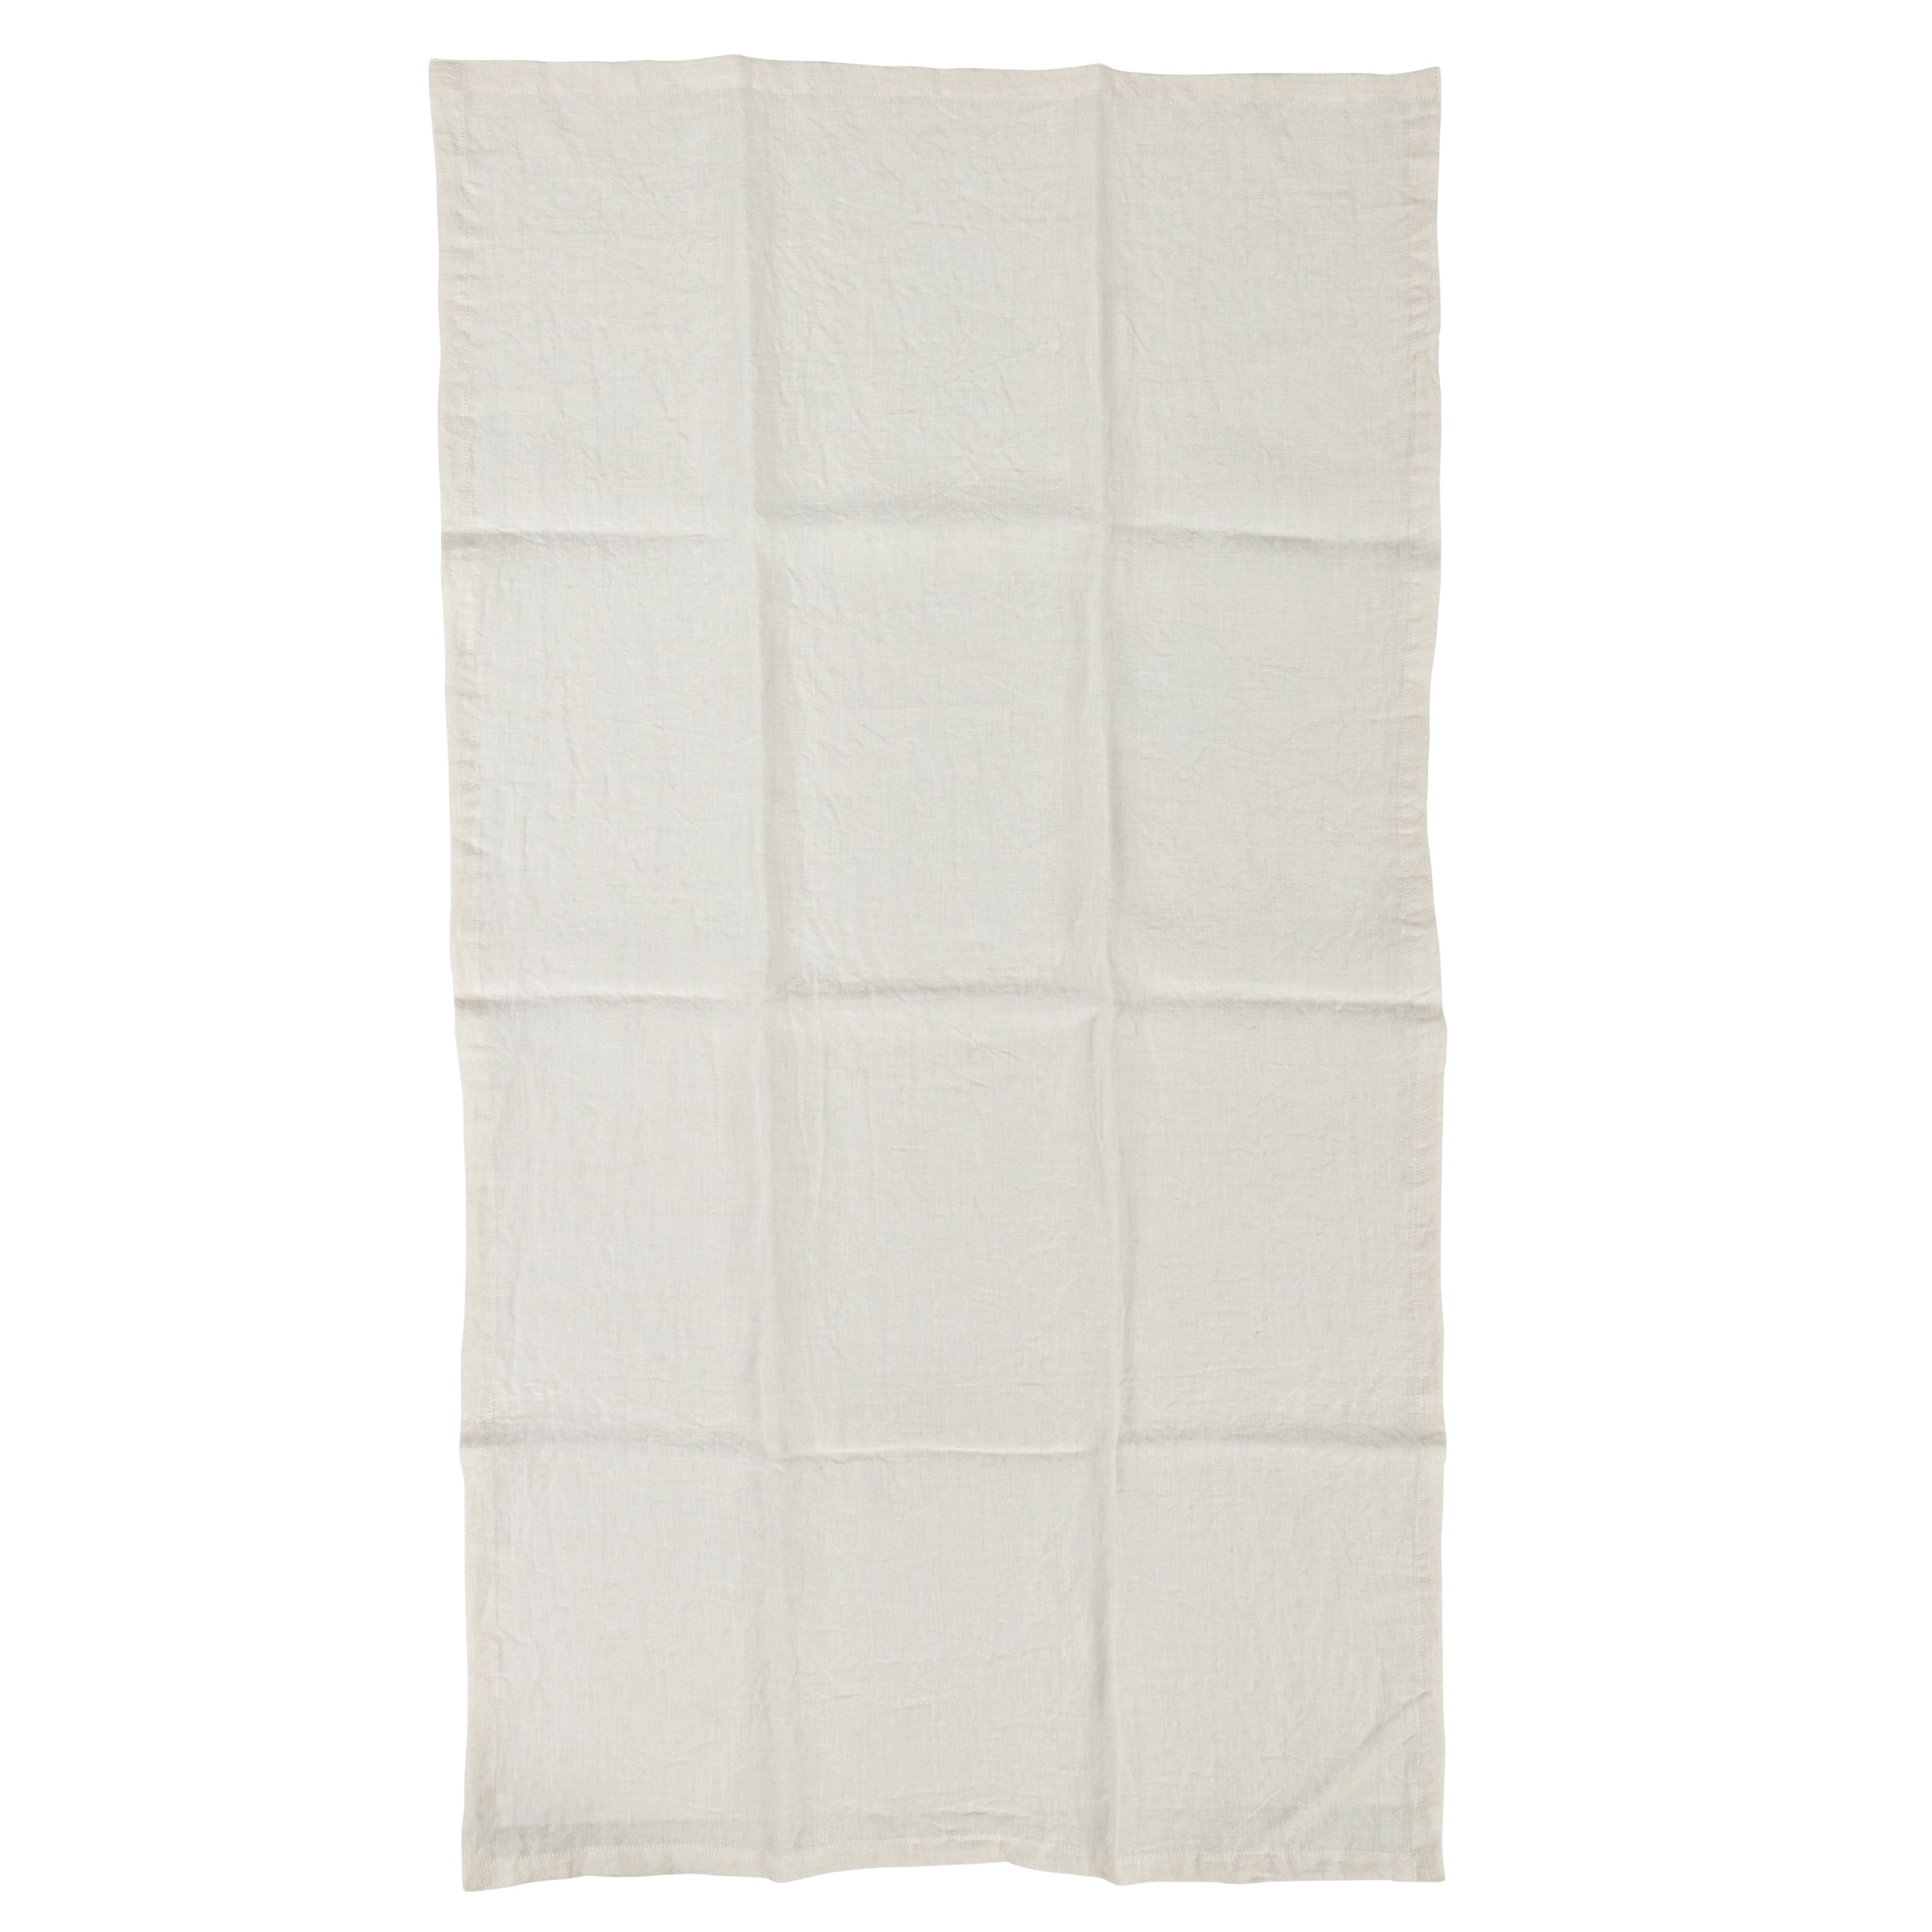 Stonewashed Linen Decorative Tea Towel - 36.0"L x 20.0"W x 0.3"H